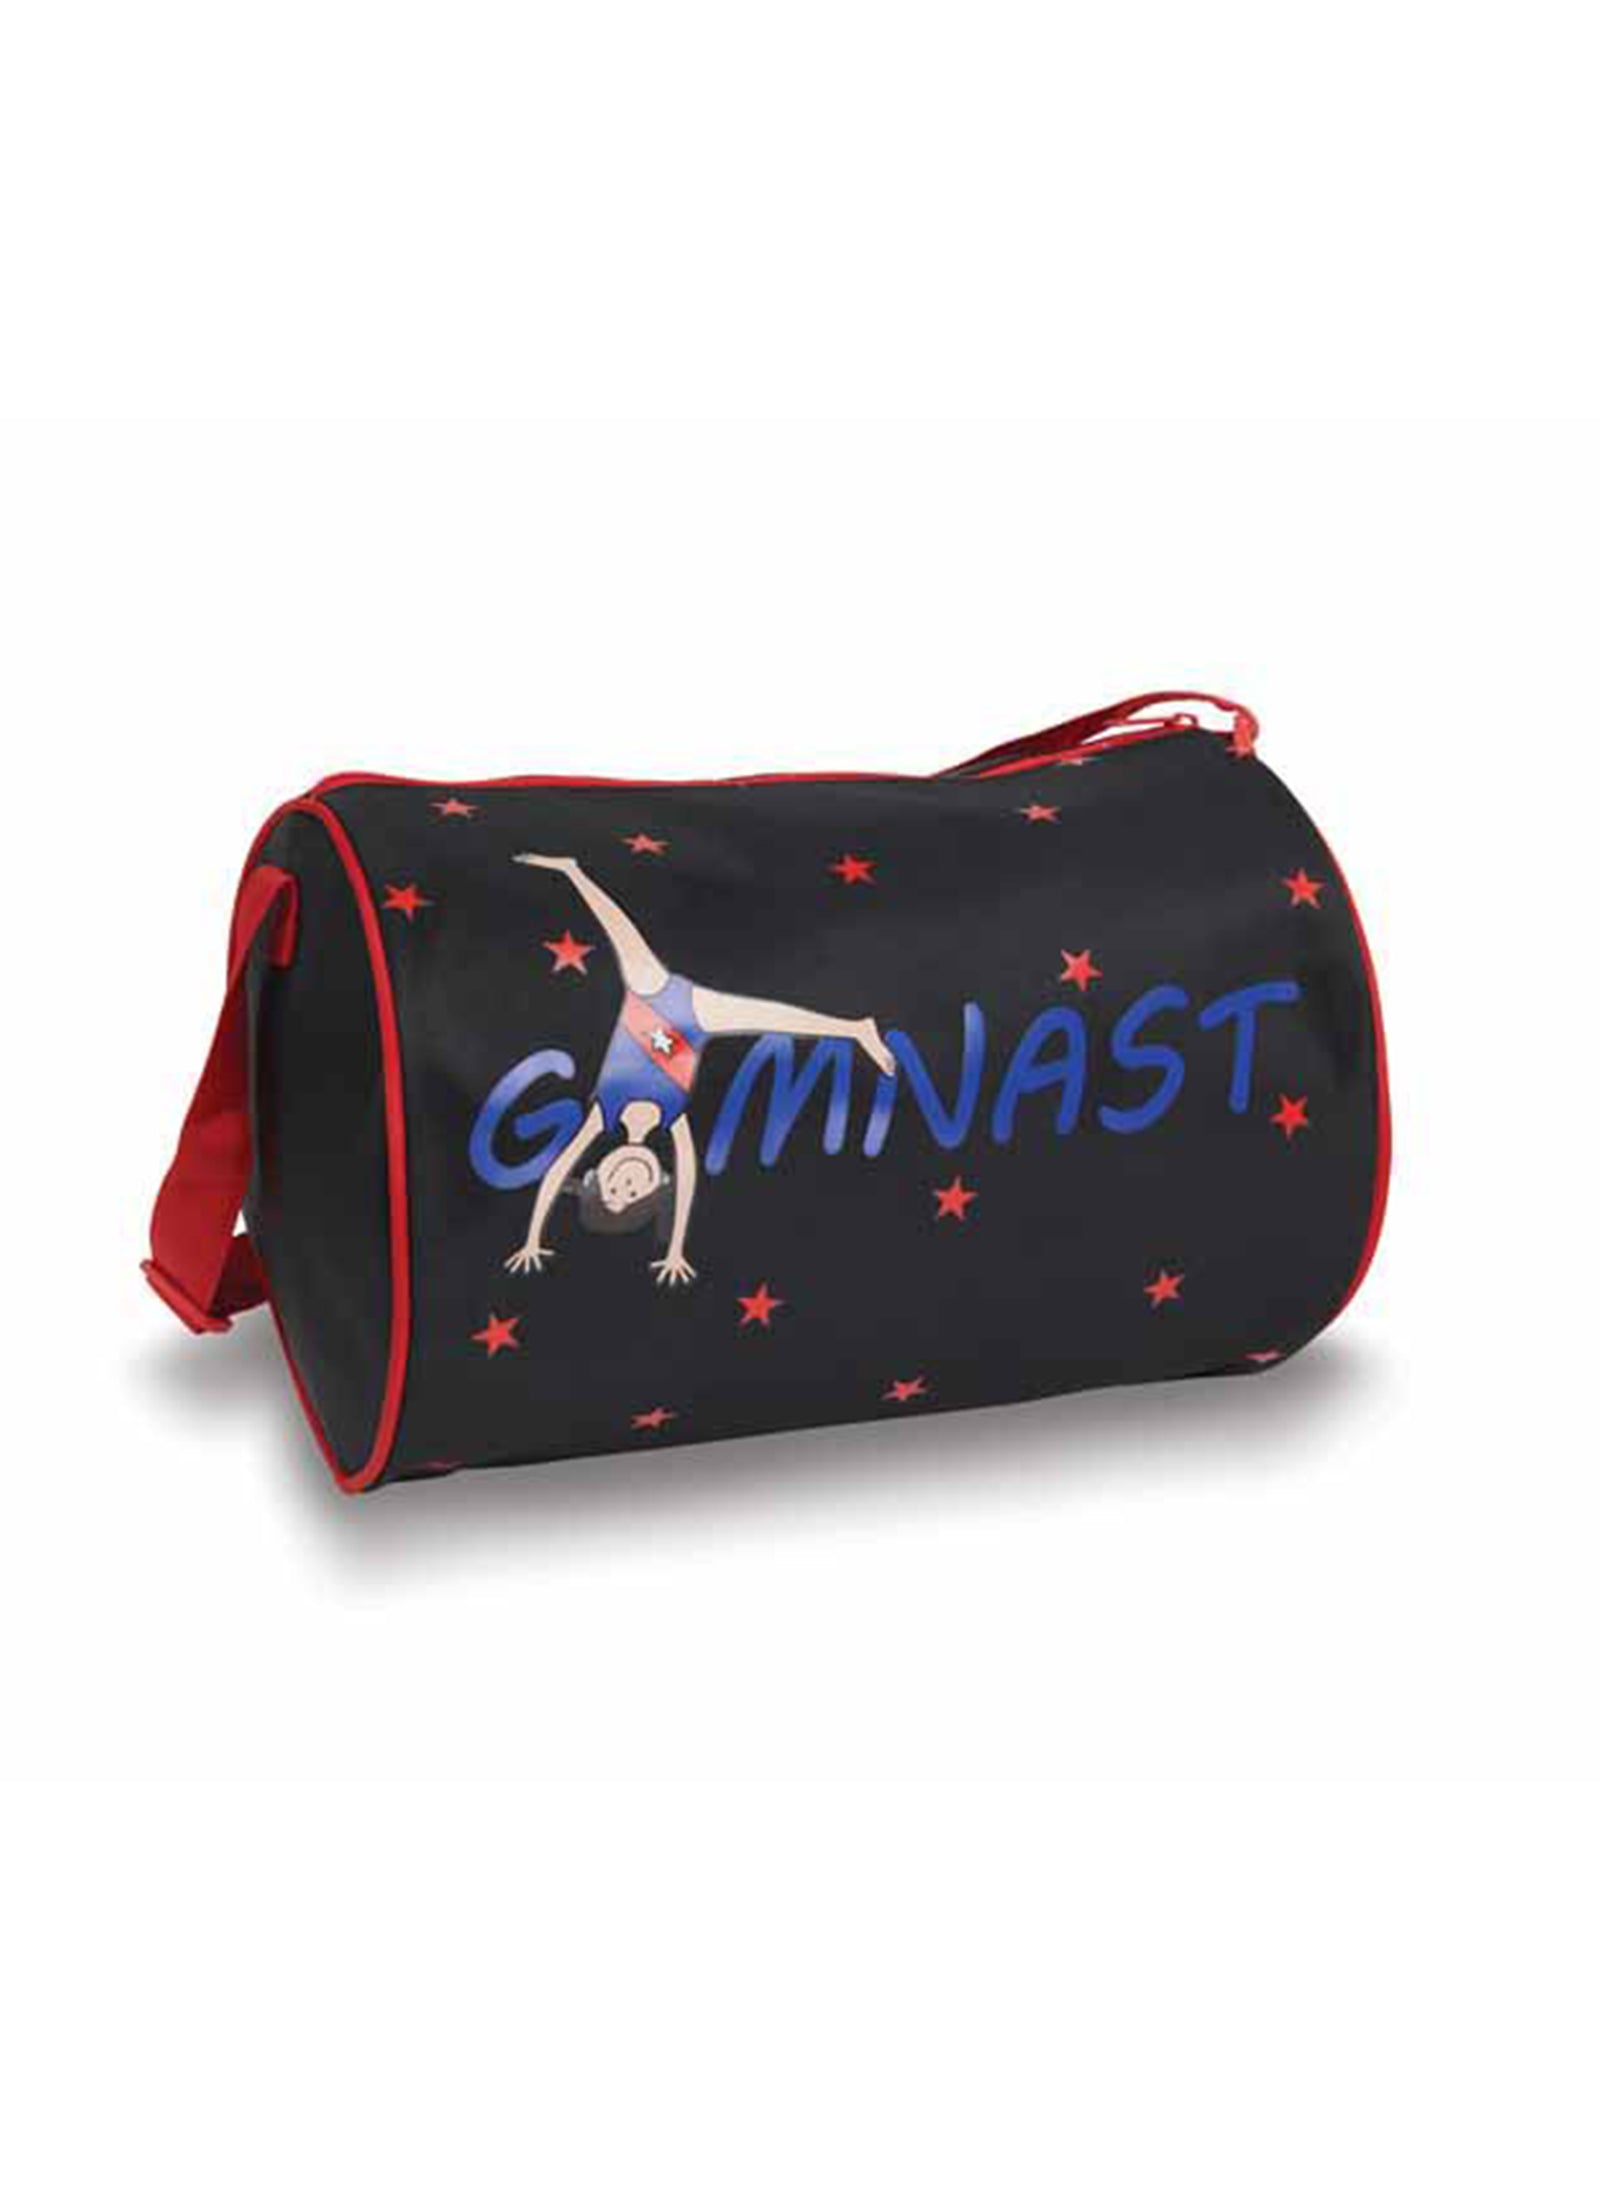 Gymnastic Duffle Bag